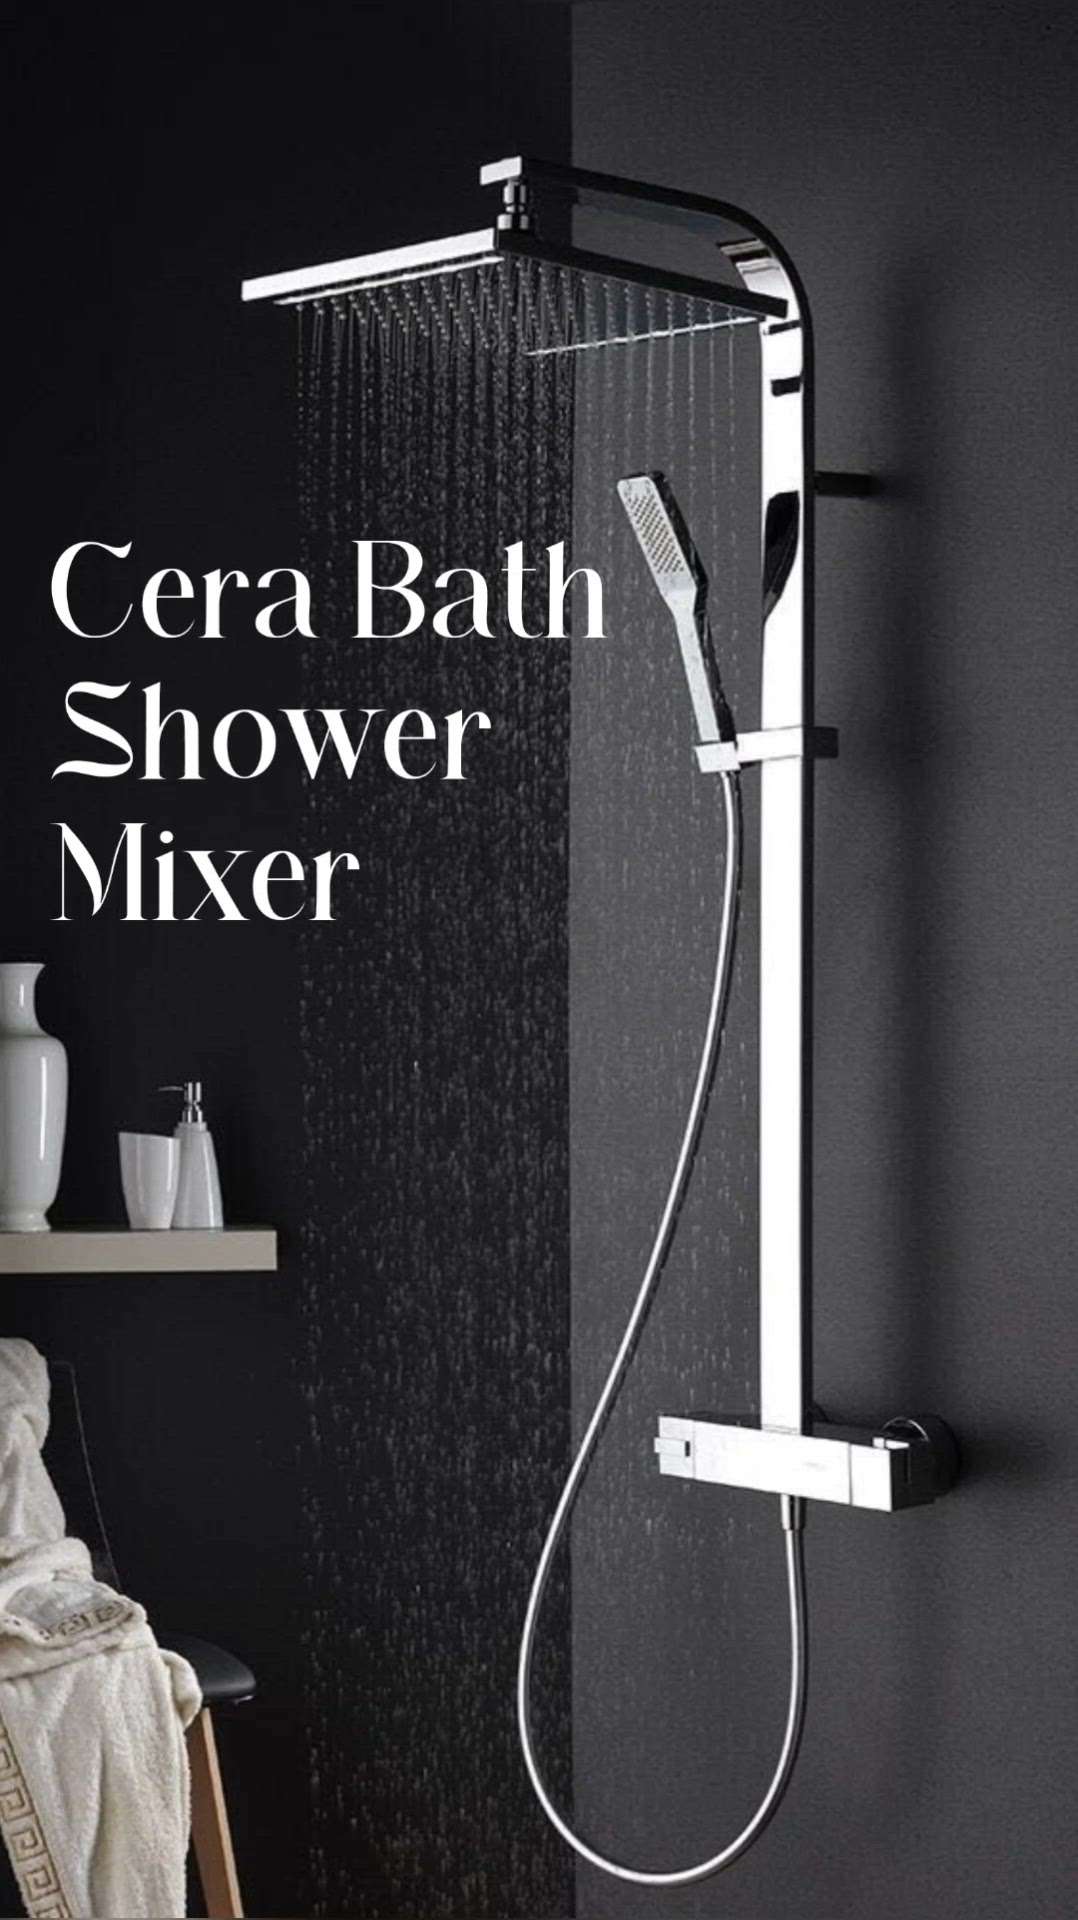 1. BRAND : CERA
PRODUCT: SHOWER COLUMN BATH SYSTEM
SERIES : SAVINO
COLOUR / FINISH : CHROME
SPECIFICATIONS: EASY TO CLEAN, EASY INSTALLATION, TRENDY LOOK, SLEEK DESIGN

 #cera  #showerpanel  #showercolumnbathsystem  #sanitaryshopping  #bestforbathroom  #modern  #attractive  #chromefinish  #trending